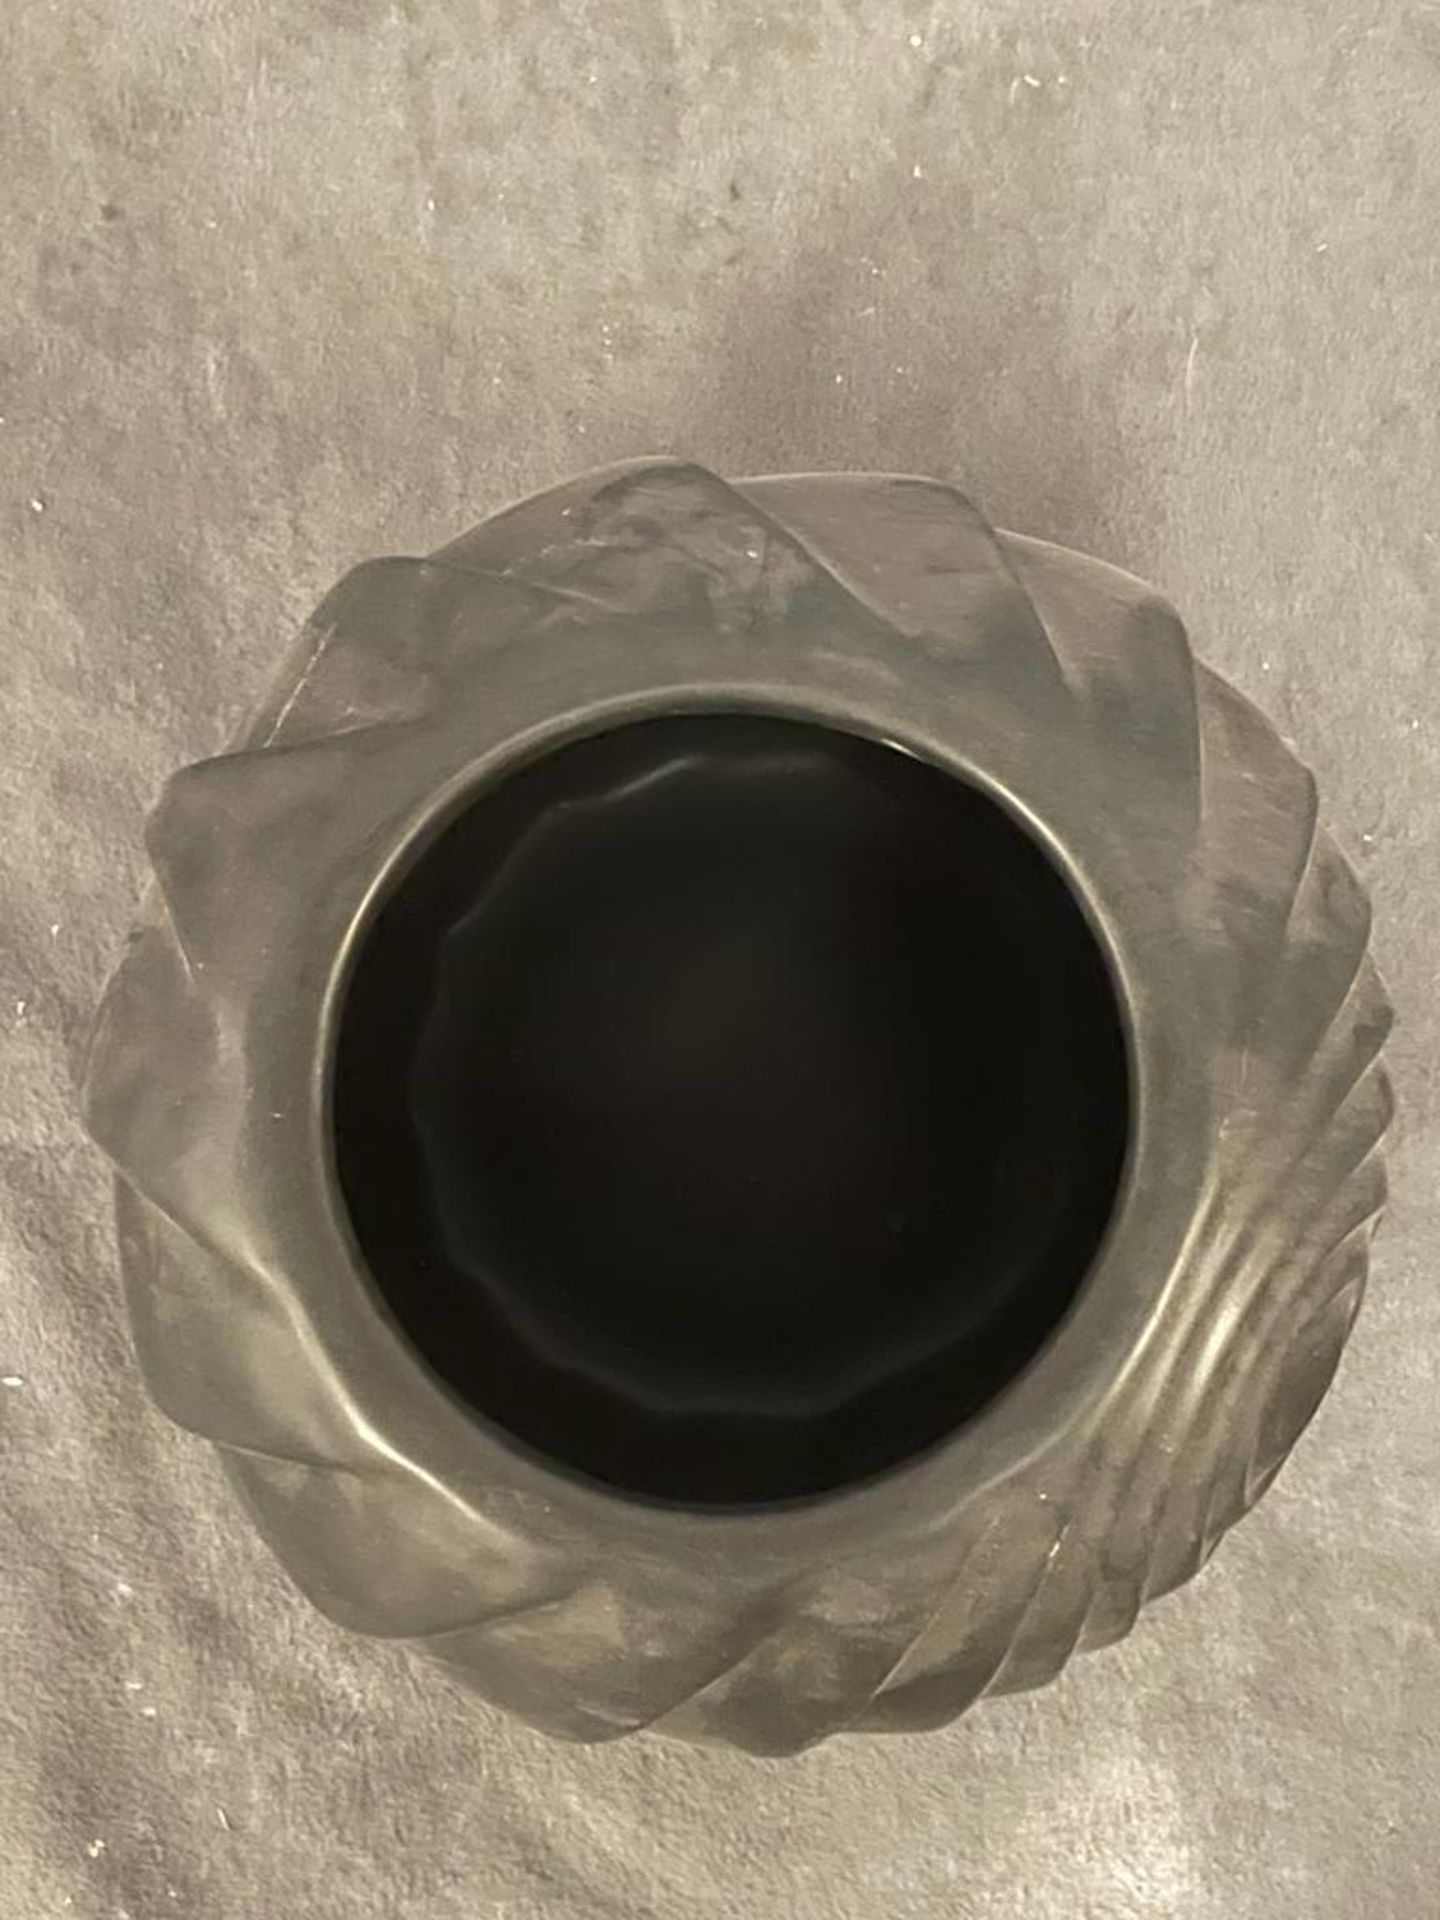 Lene Bjerre Black Vase 13cm High ( CP1291) - Image 2 of 3